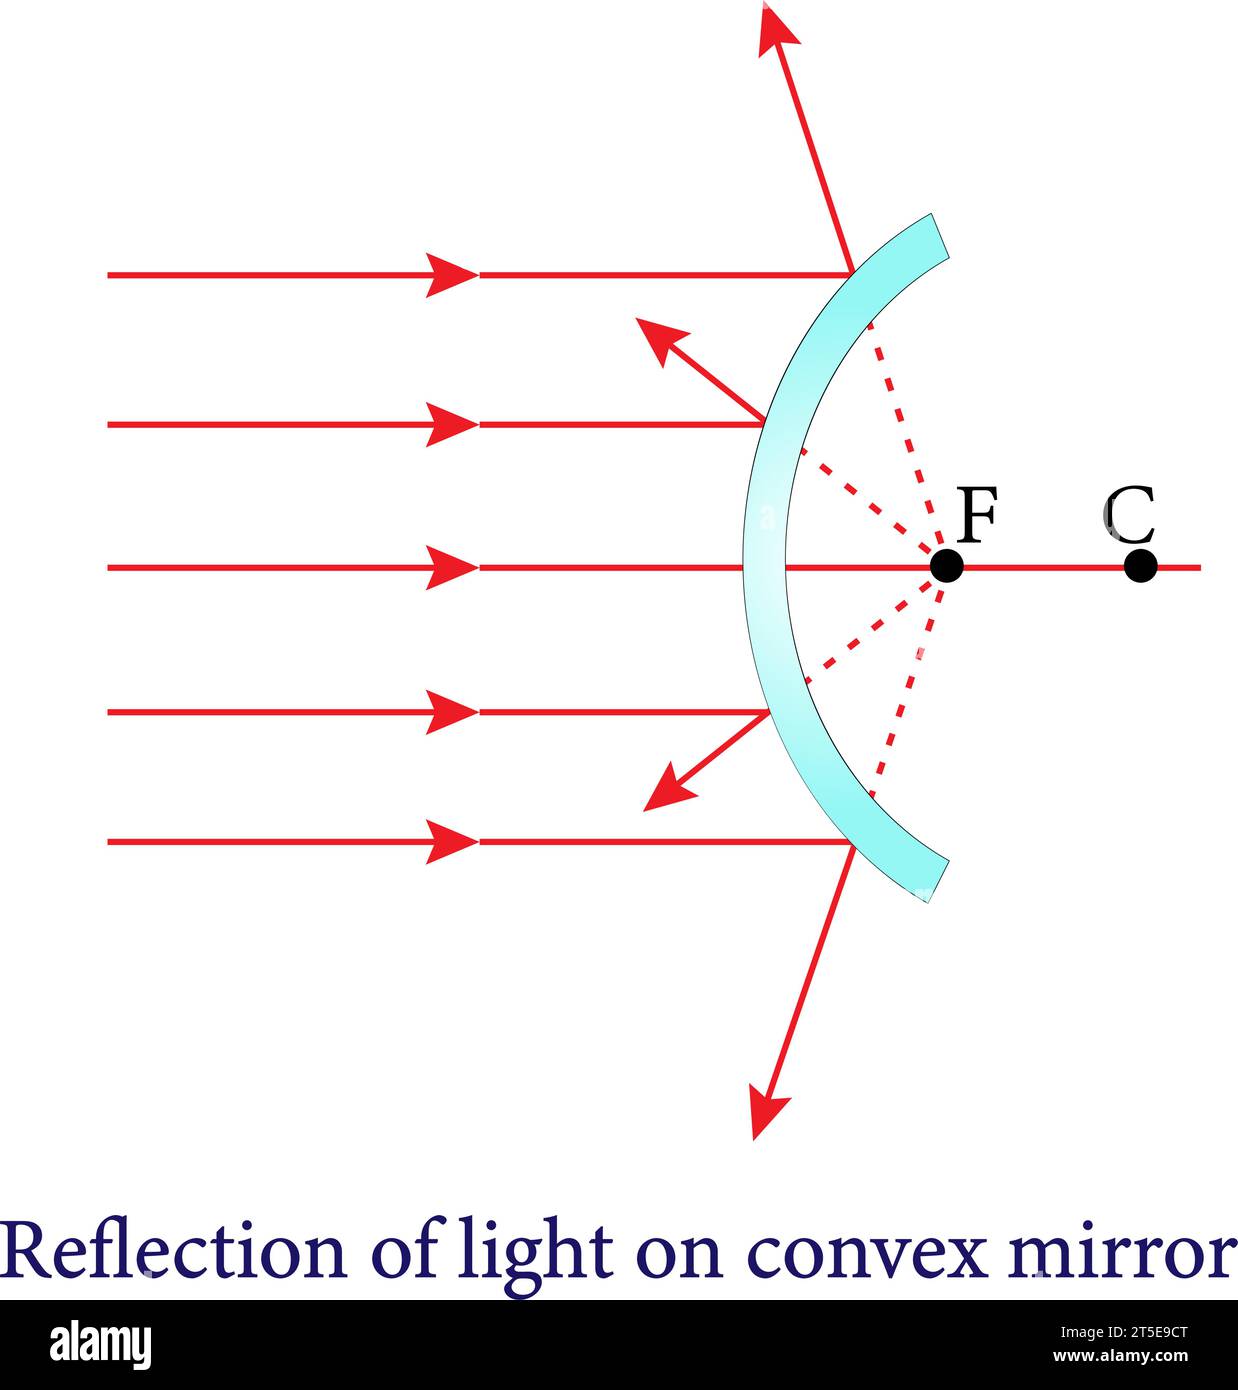 Convex mirror Stock Vector Images - Alamy